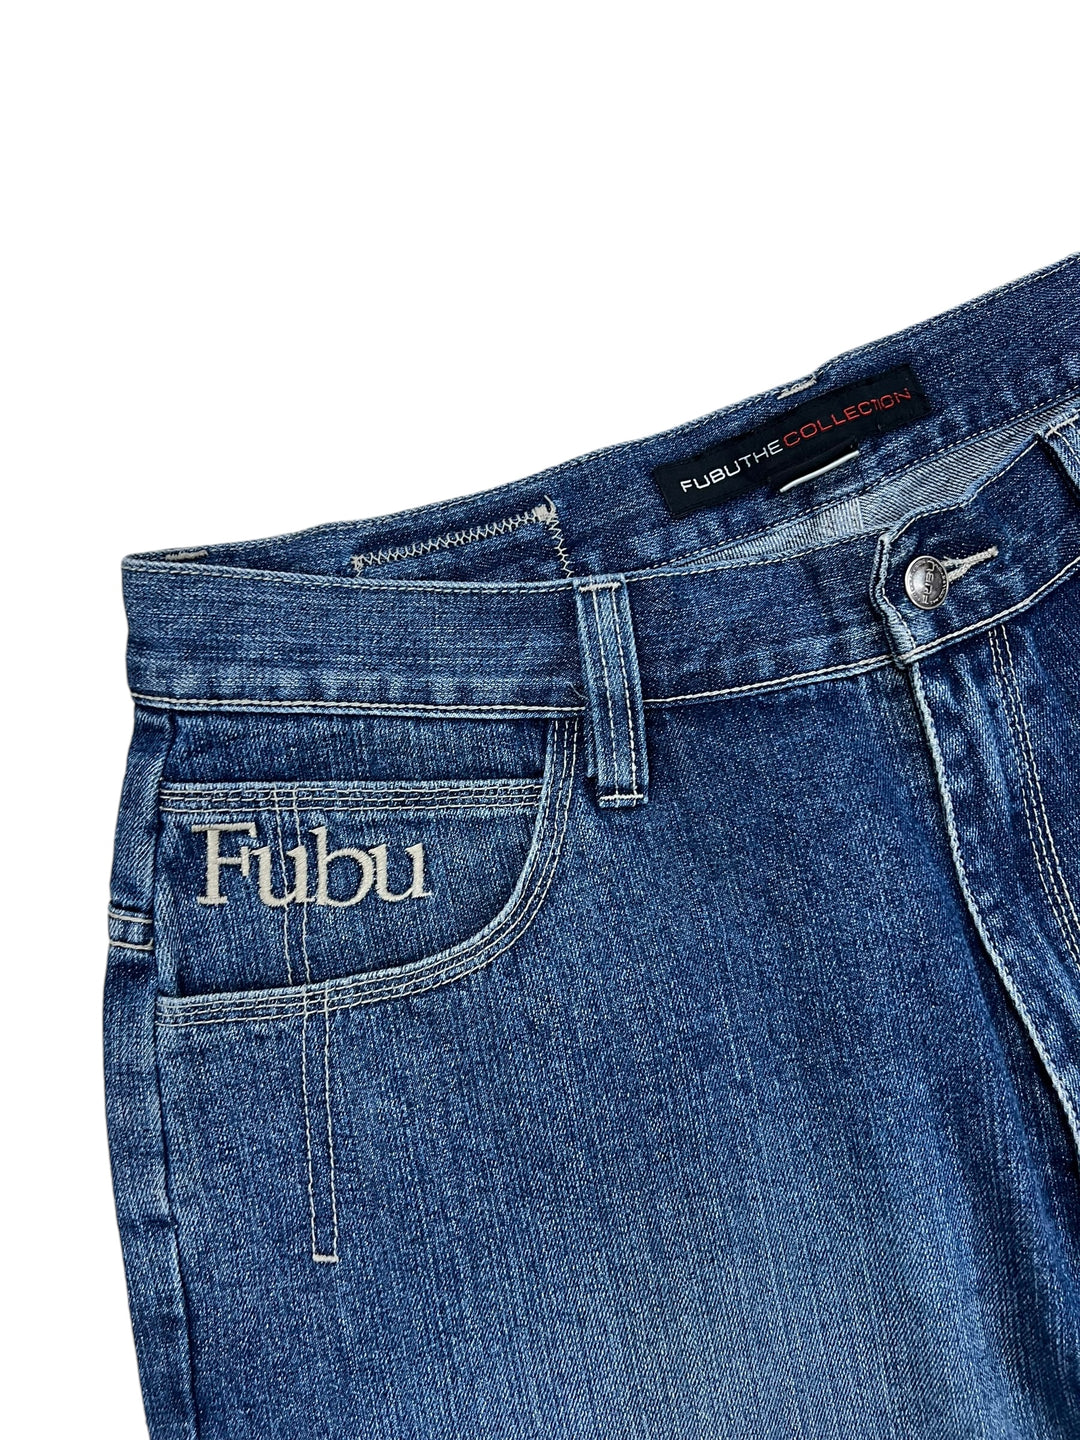 Fubu vintage denim shorts men’s large